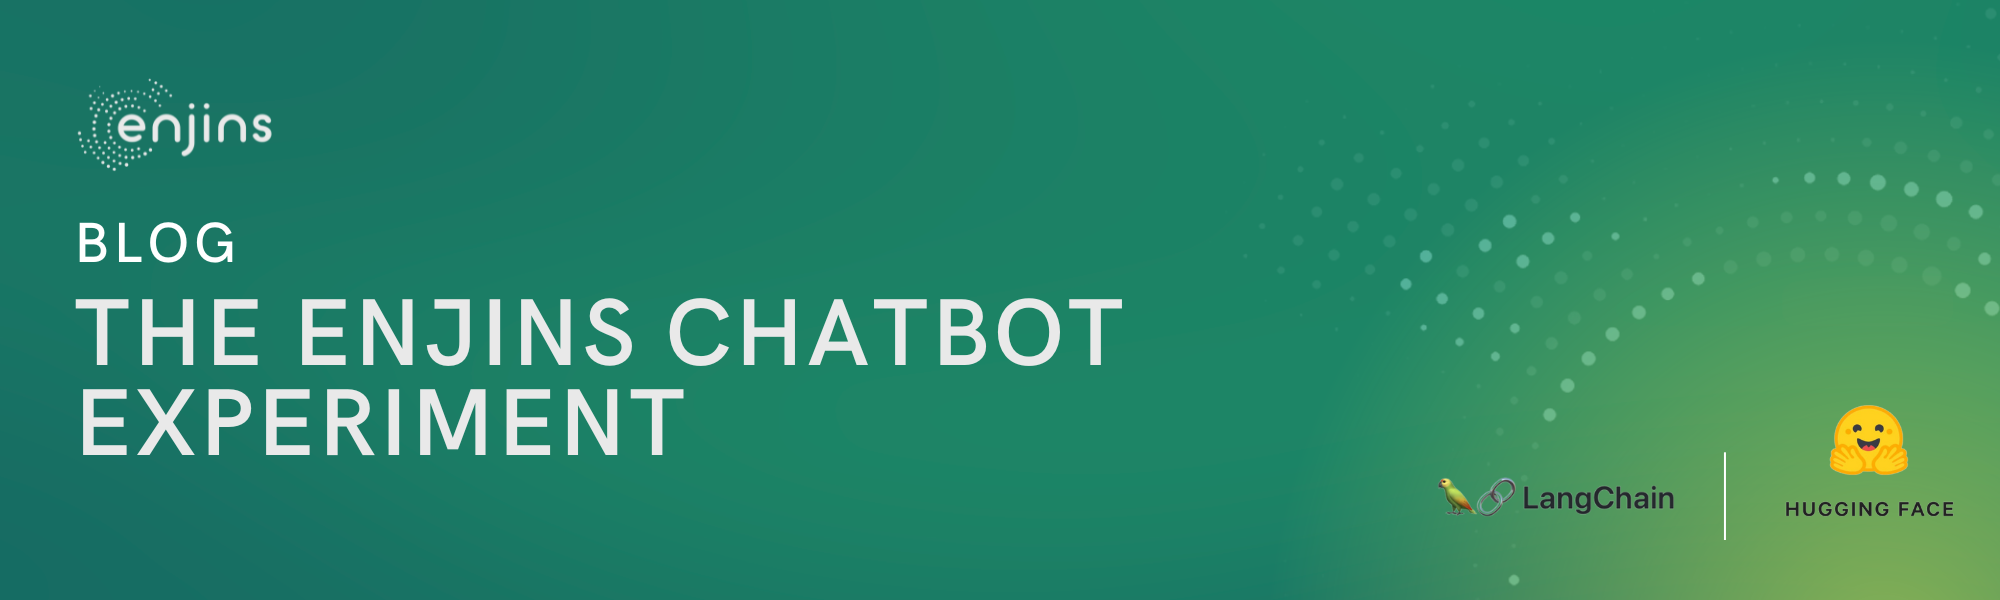 Blog: The Enjins Chatbot Experiment